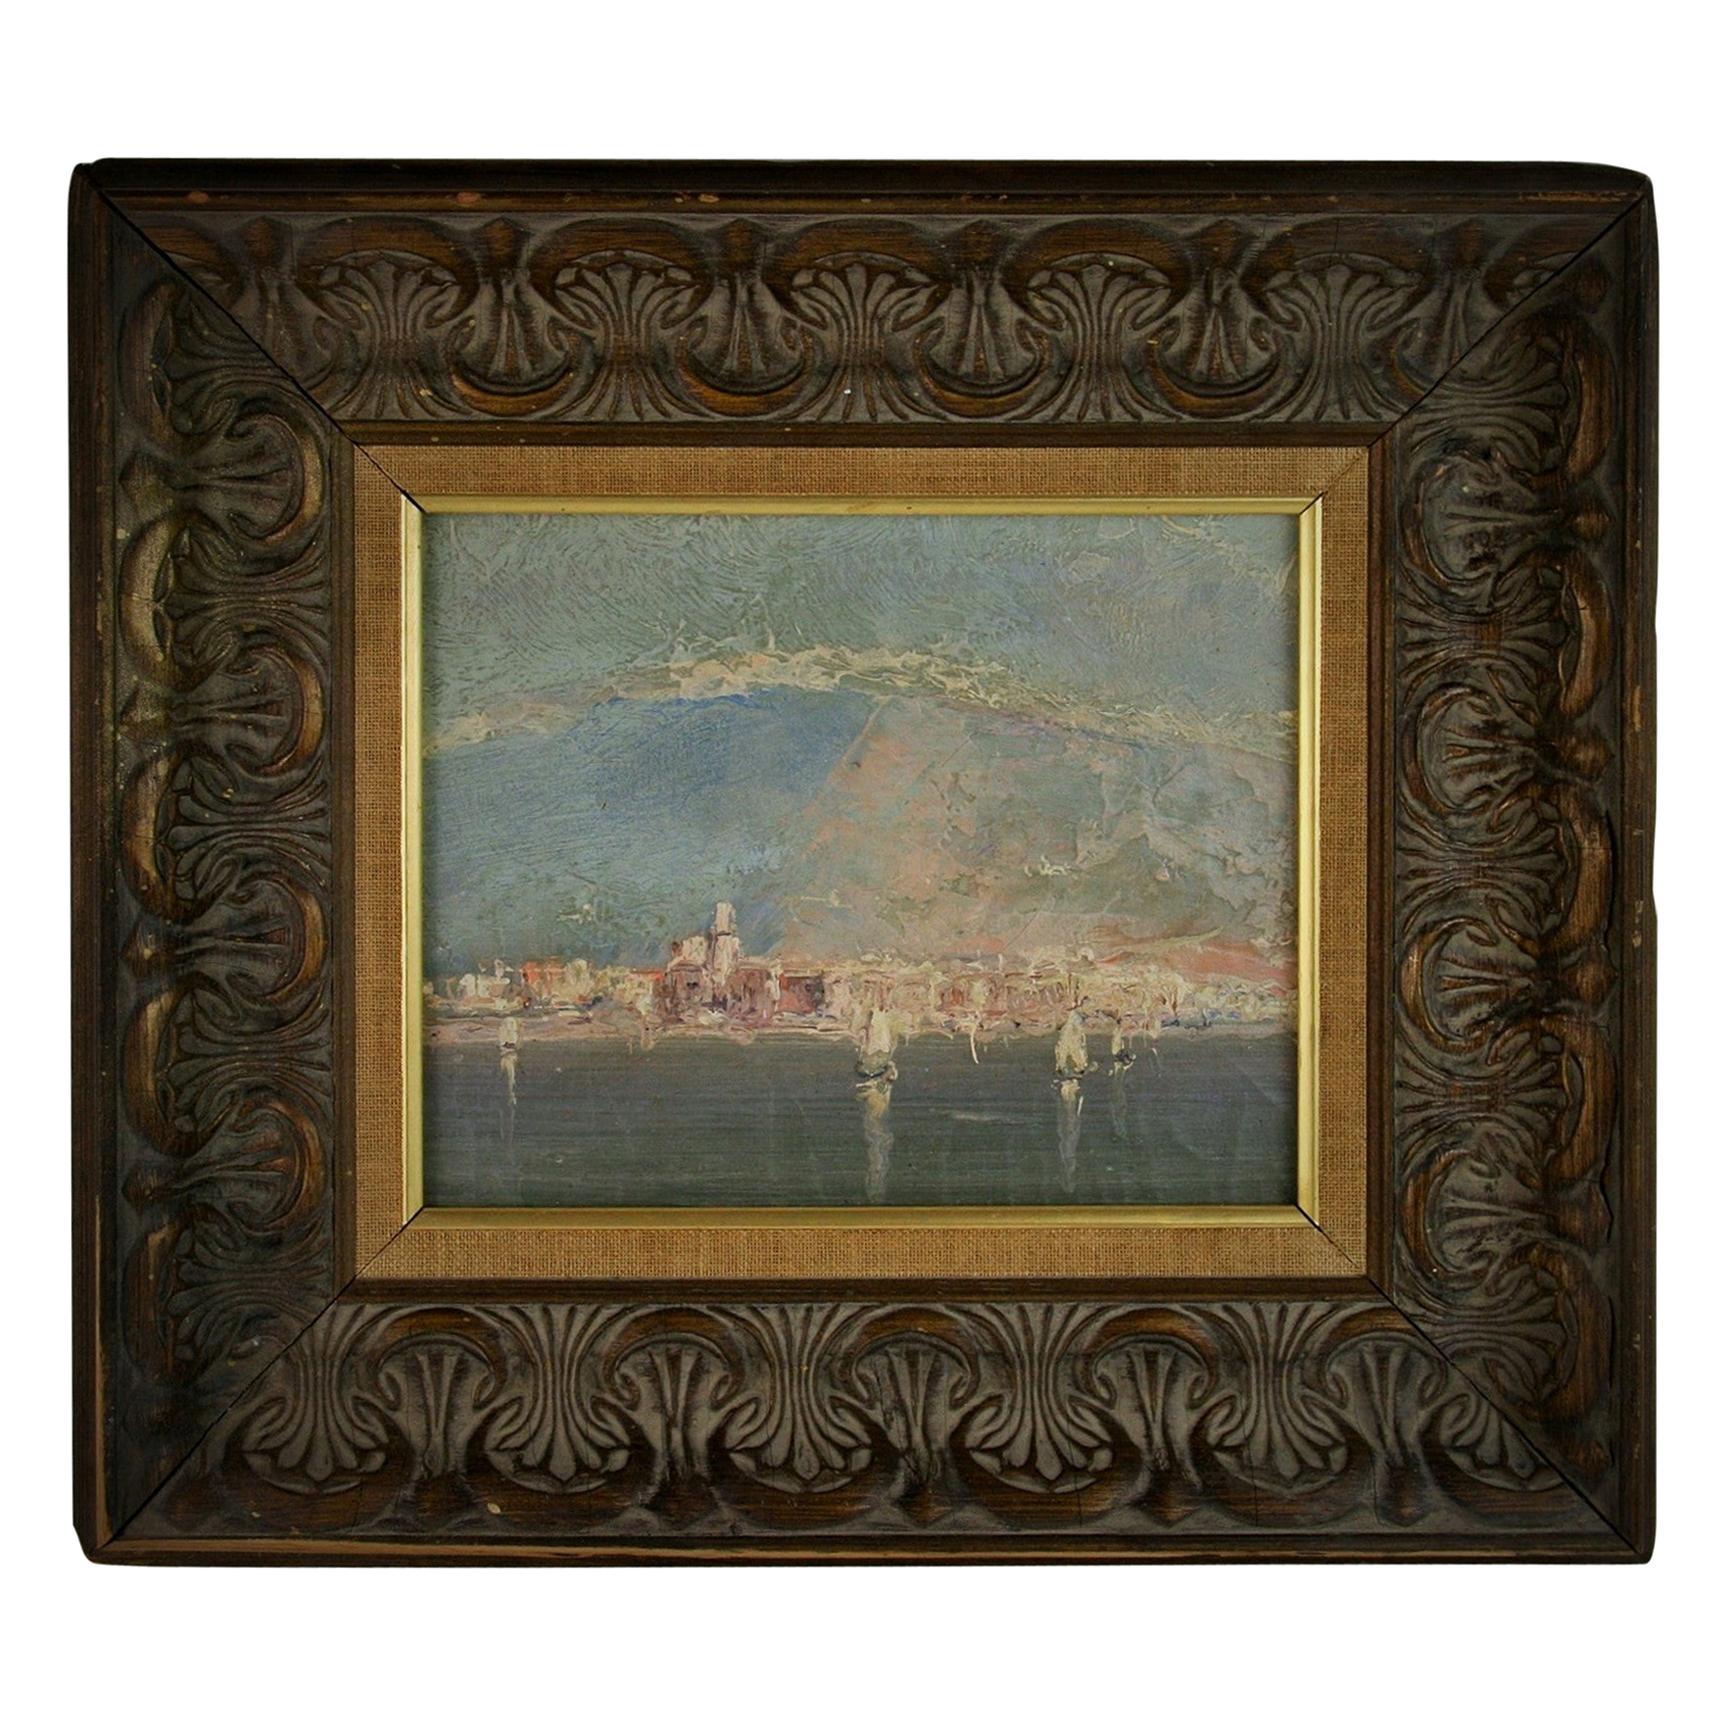 3766 Italian coastal landscape set in a hand carved wood frame
Image size: 9.5 x 7.5
Signed Sima.